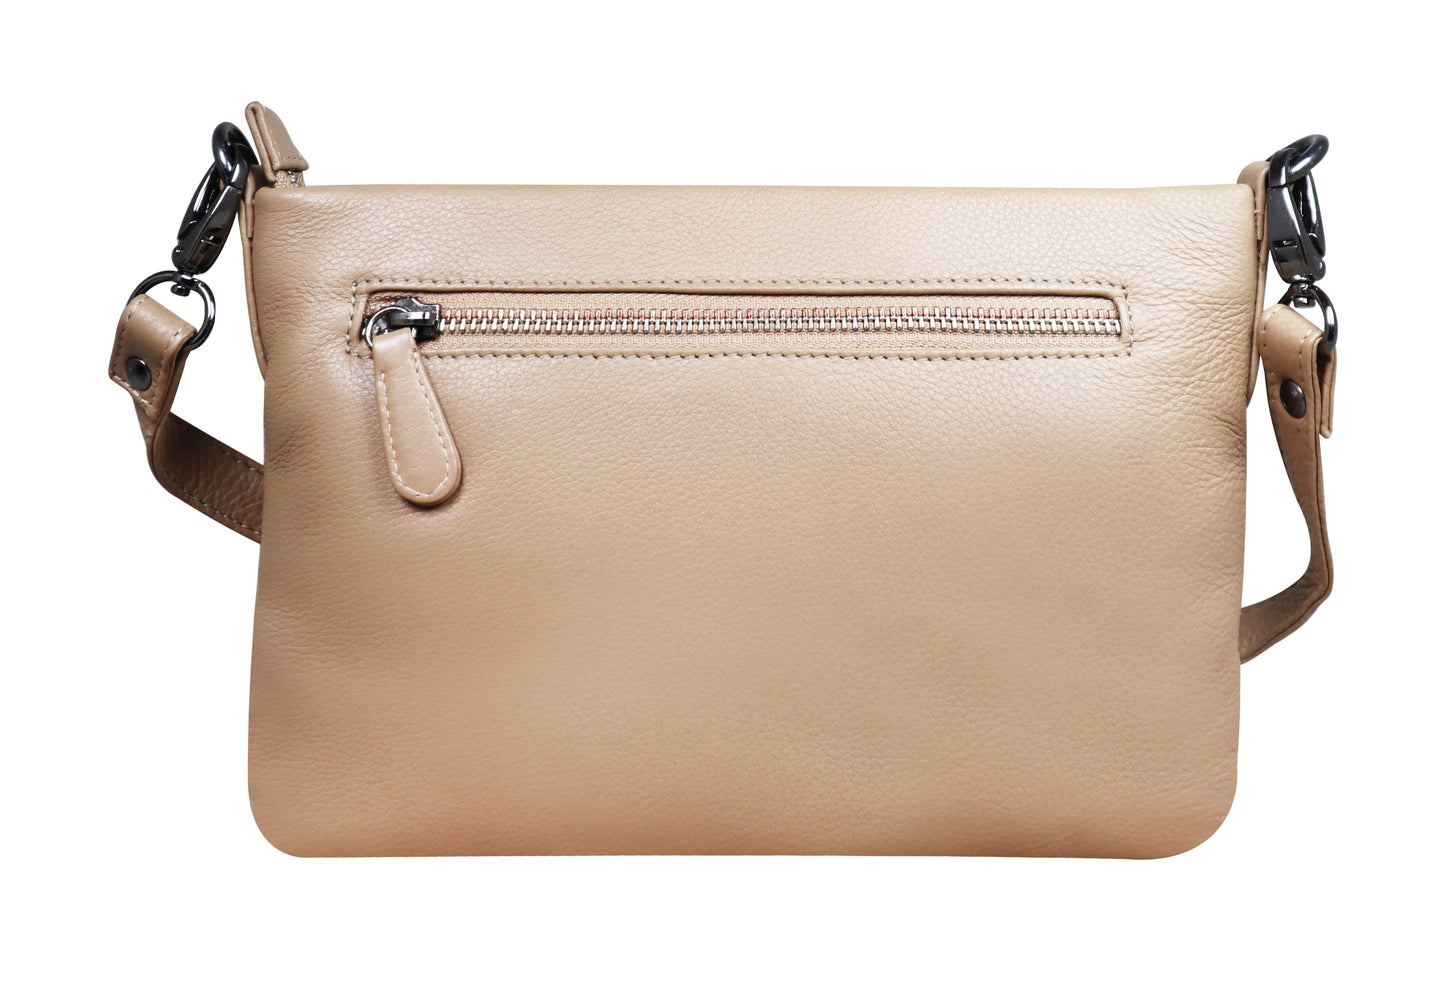 Calfnero Genuine Leather Women's Sling Bag (71002-beige)